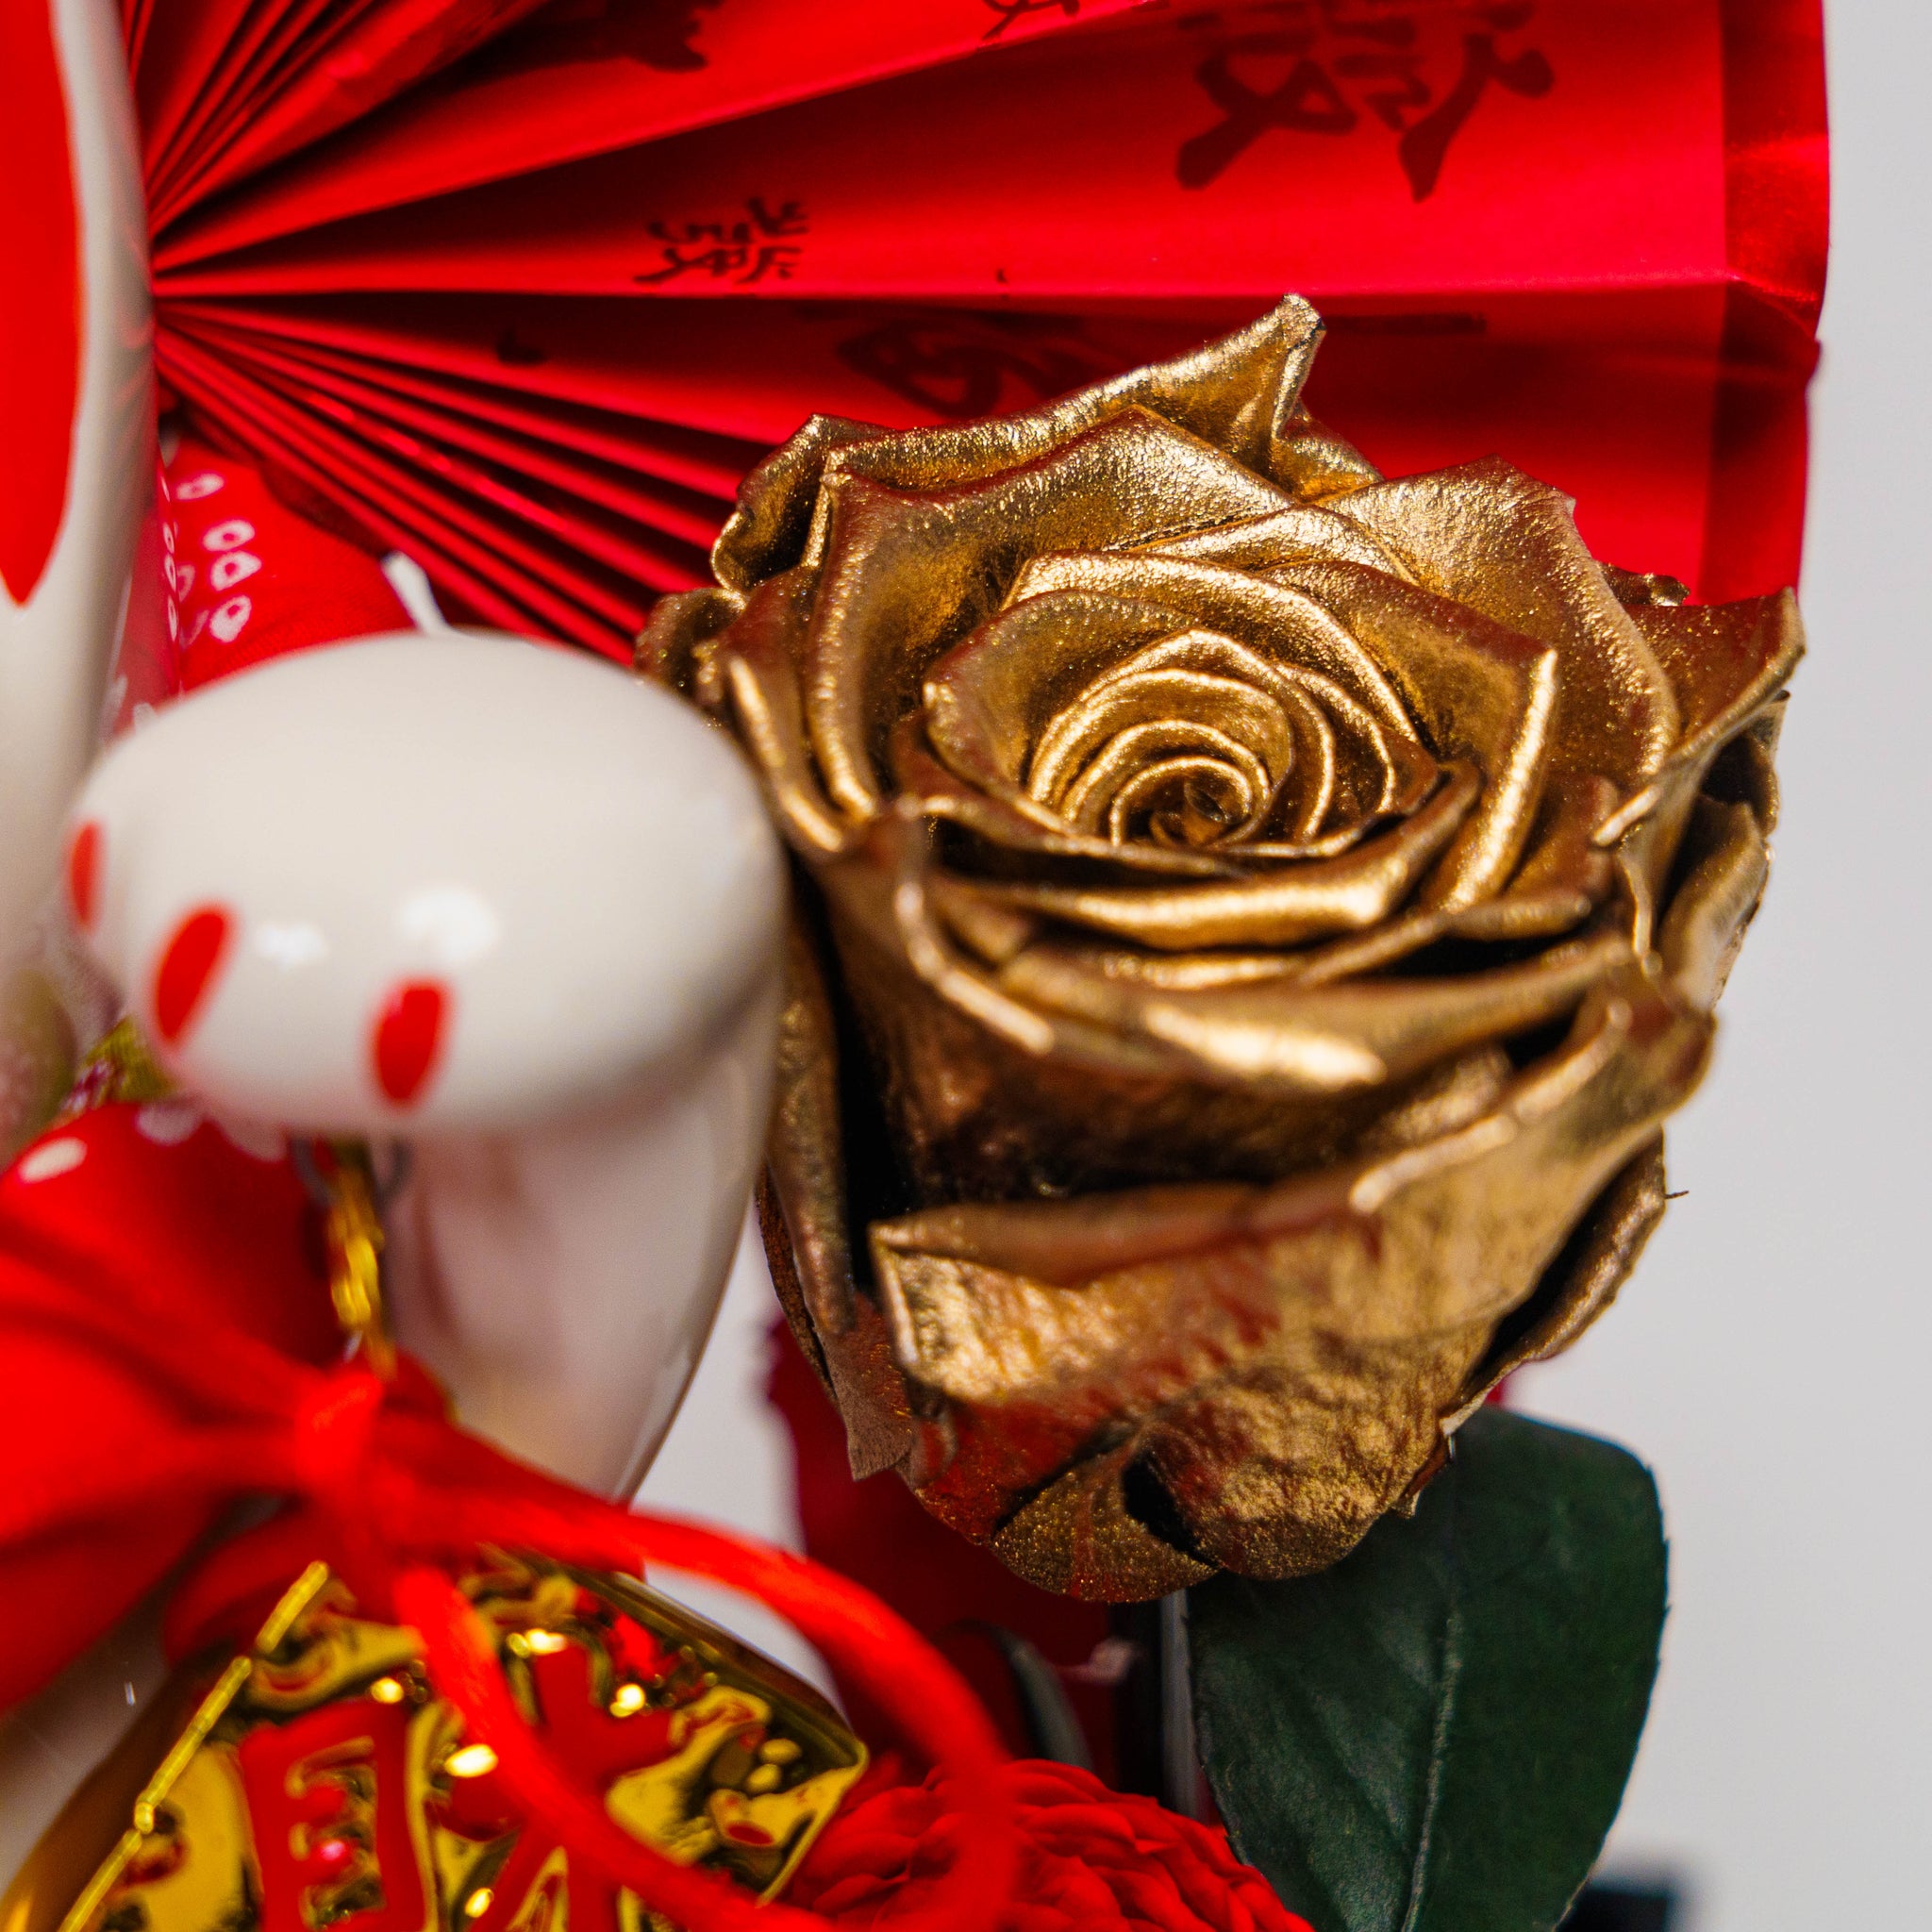 Luxury Maneki Neko Lucky Fortune Cat Red Mixed Floral Design